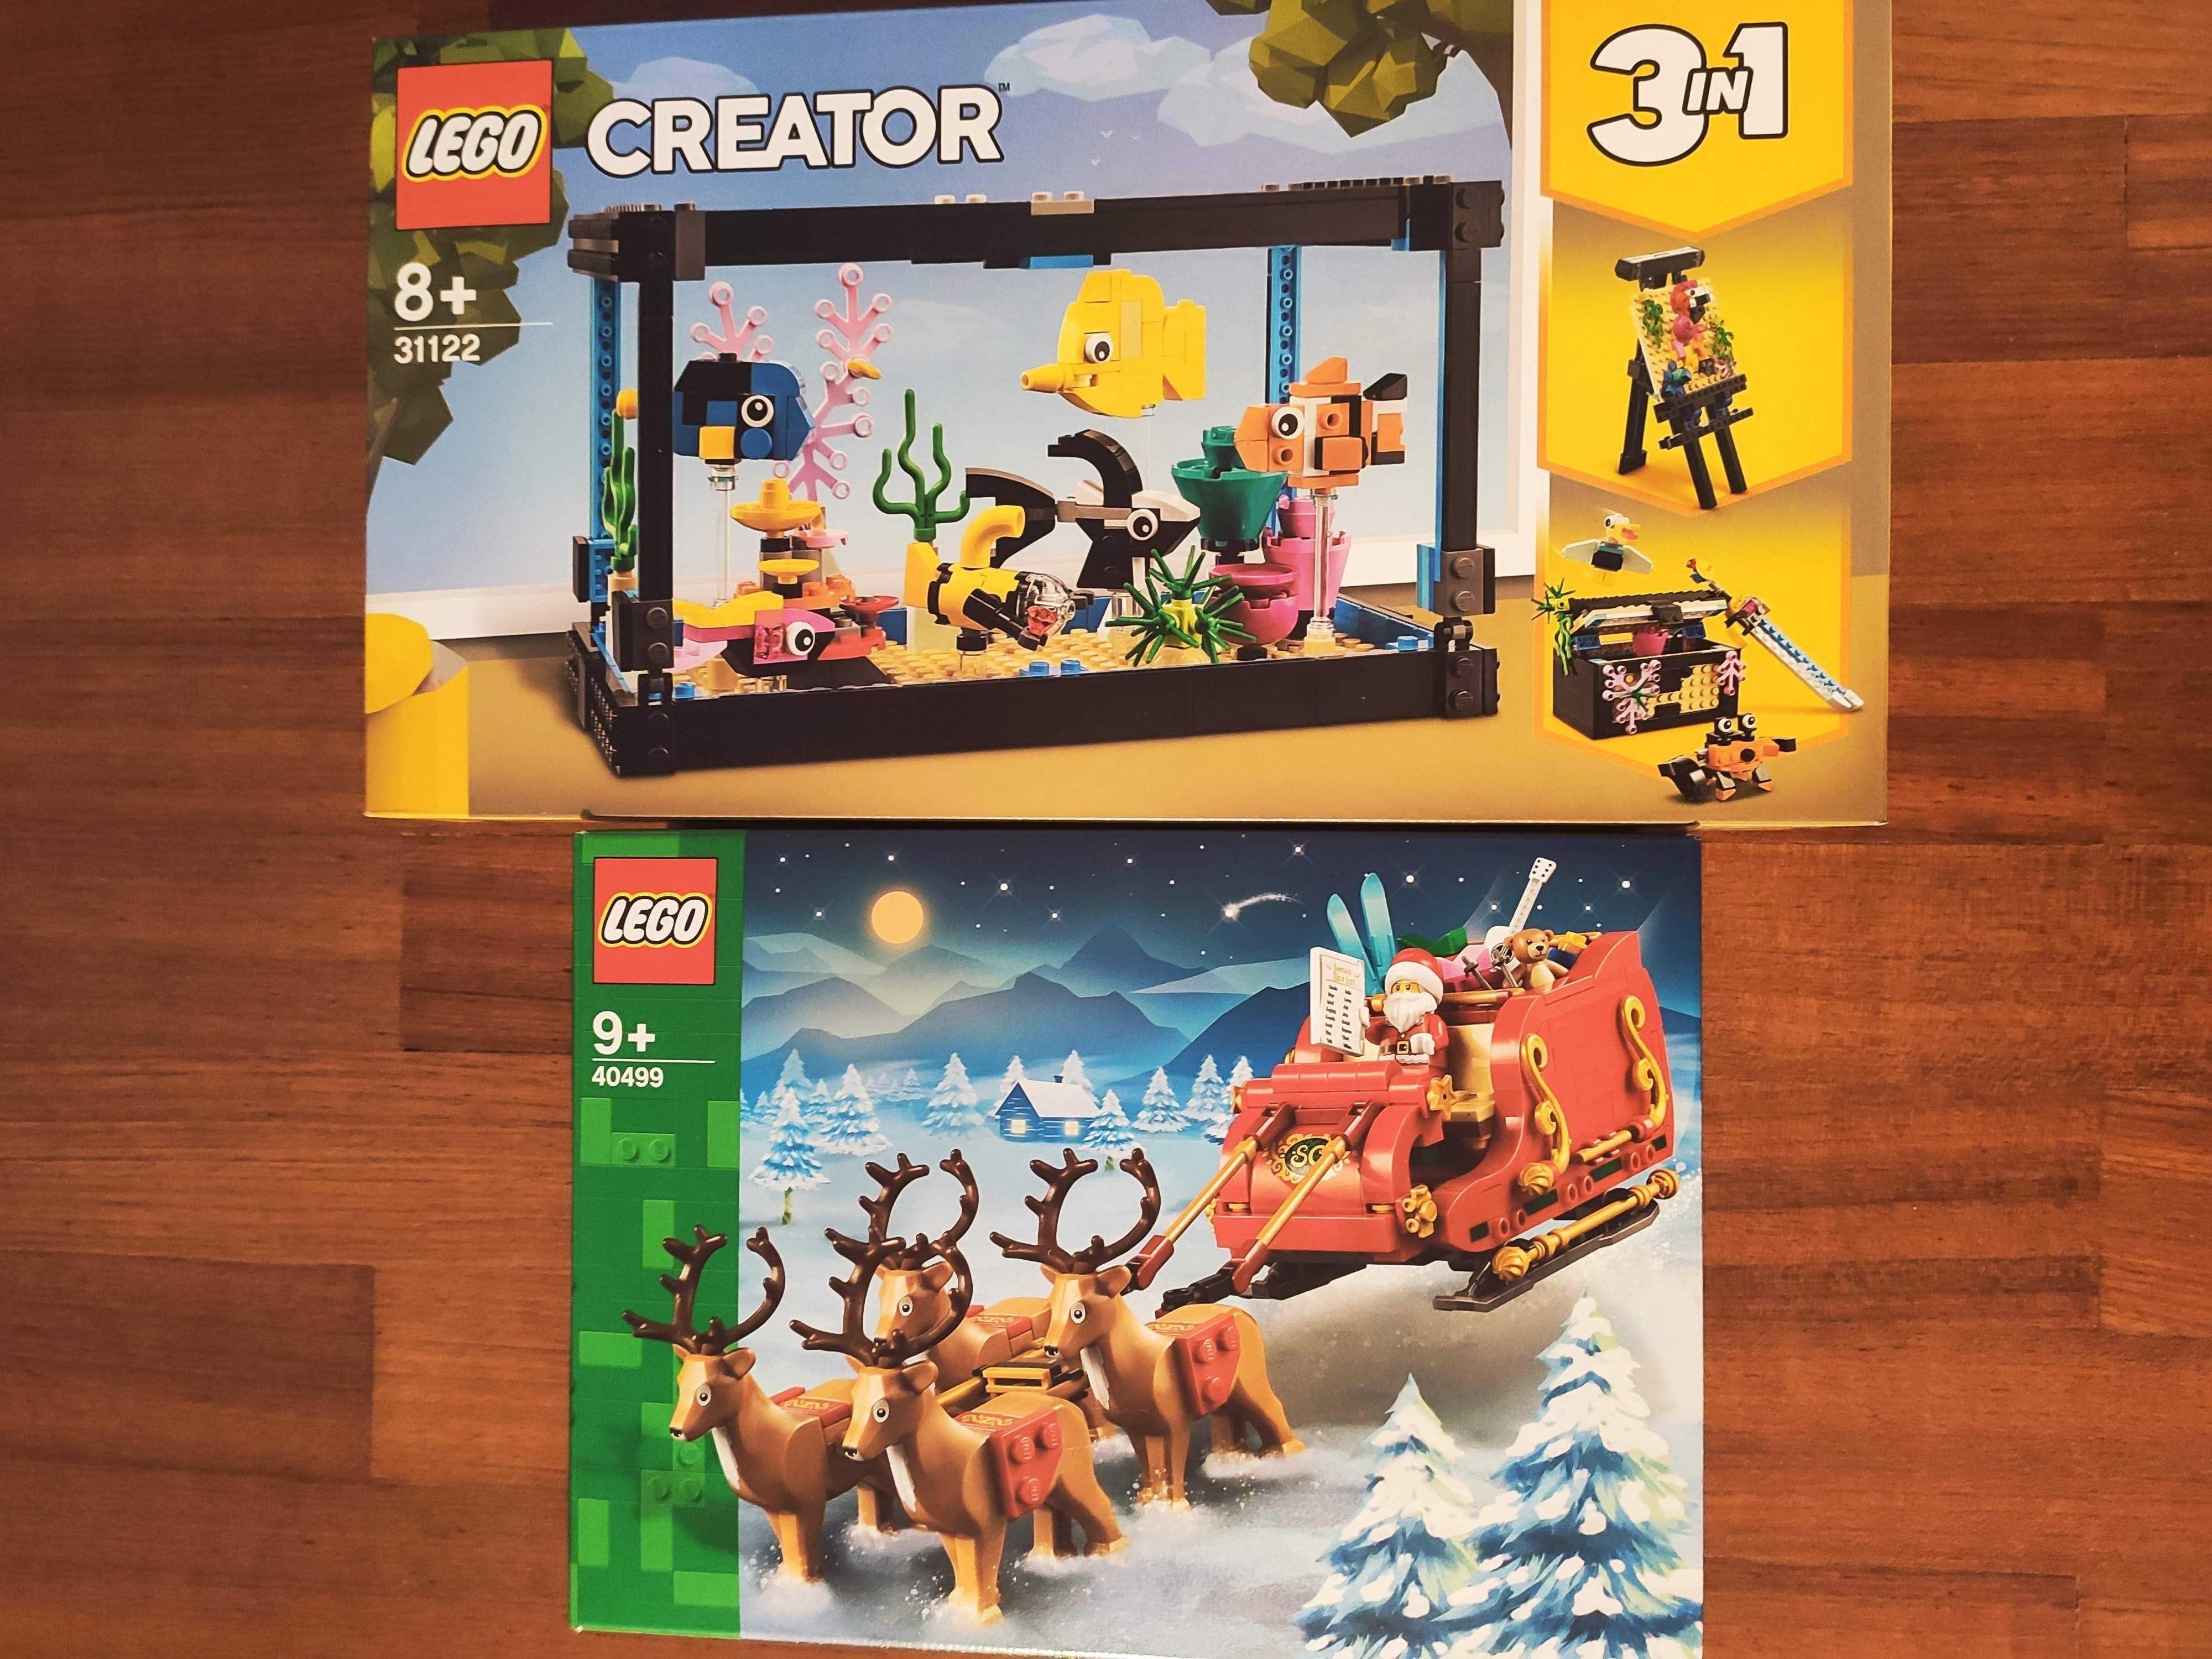 Lego 40499 Trenó do Pai Natal 31122 Aquario Creator